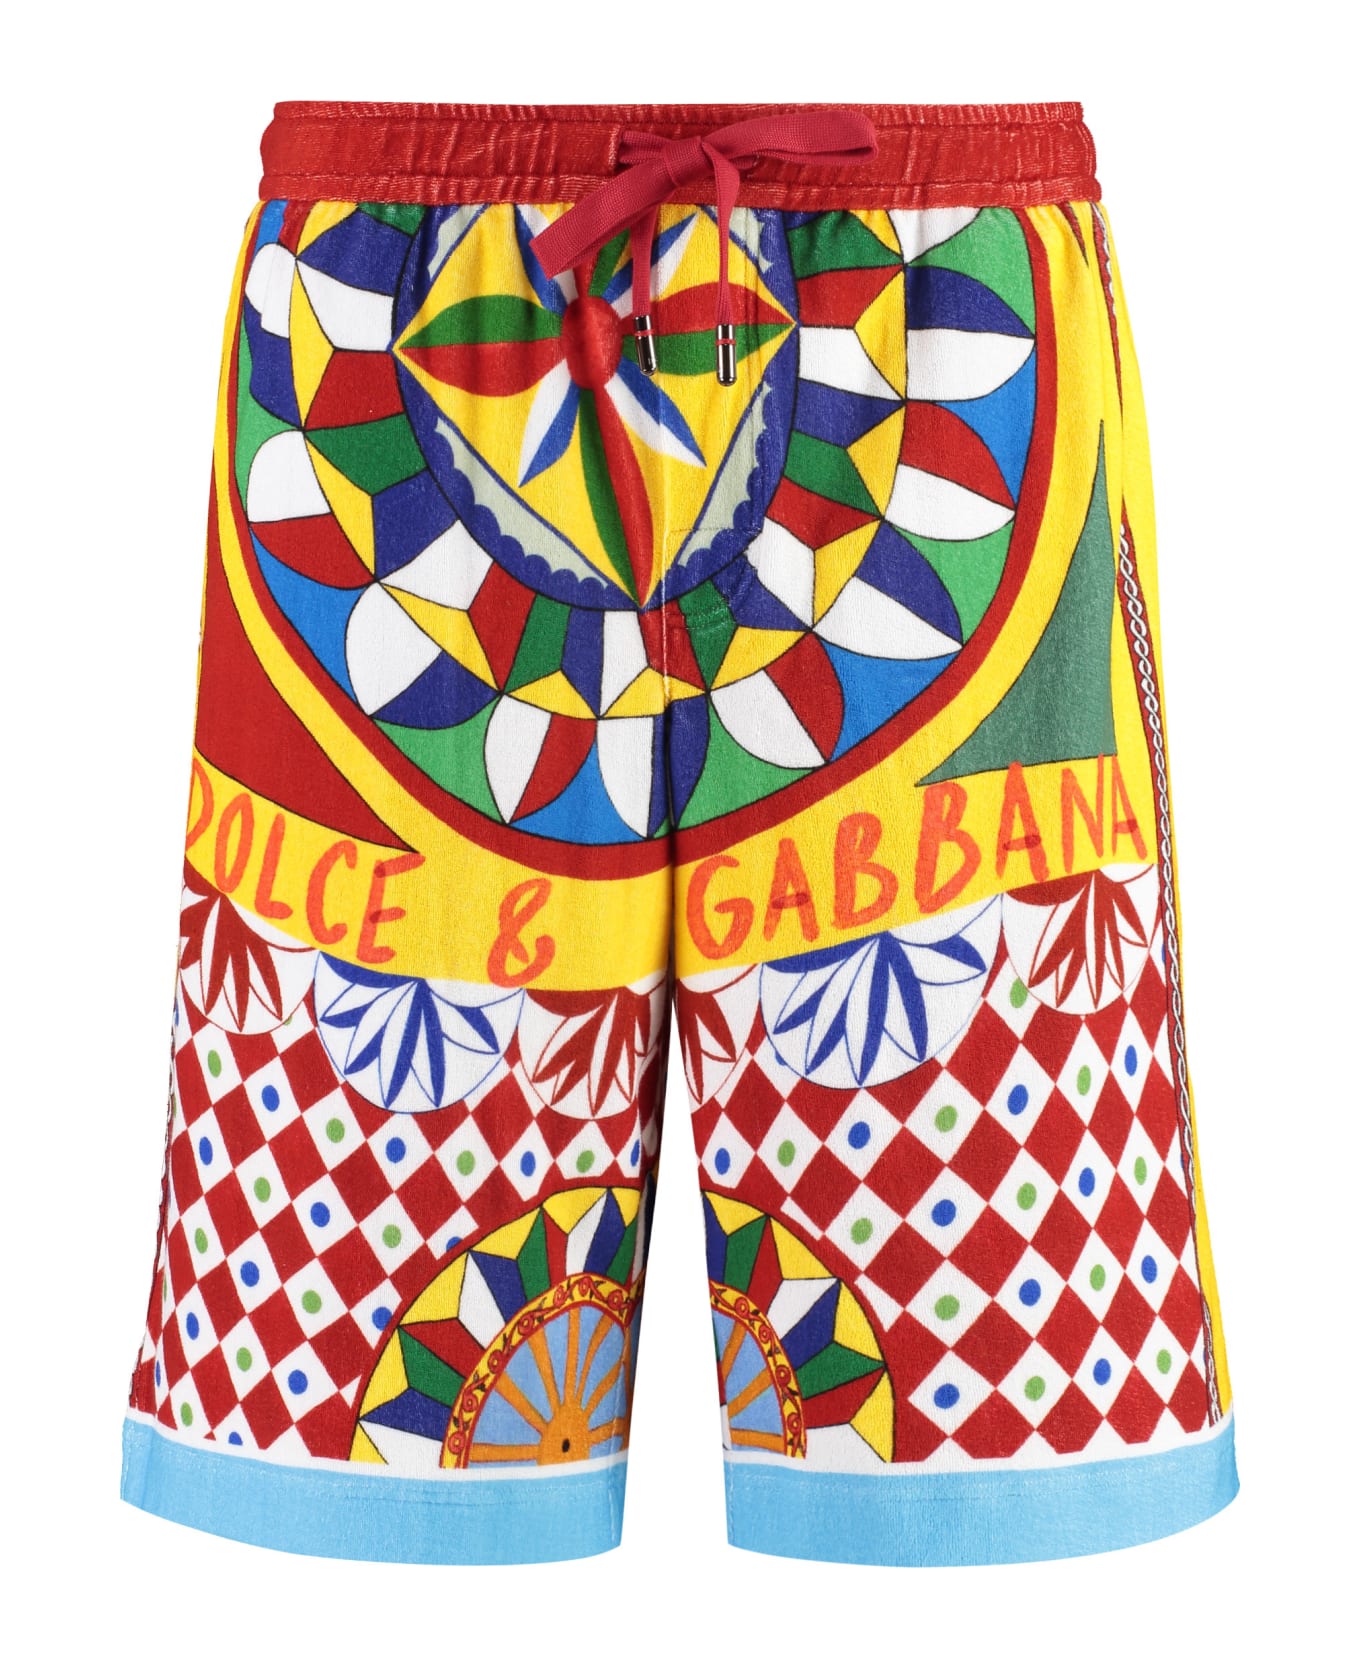 Dolce & Gabbana Cotton Shorts - Multicolor